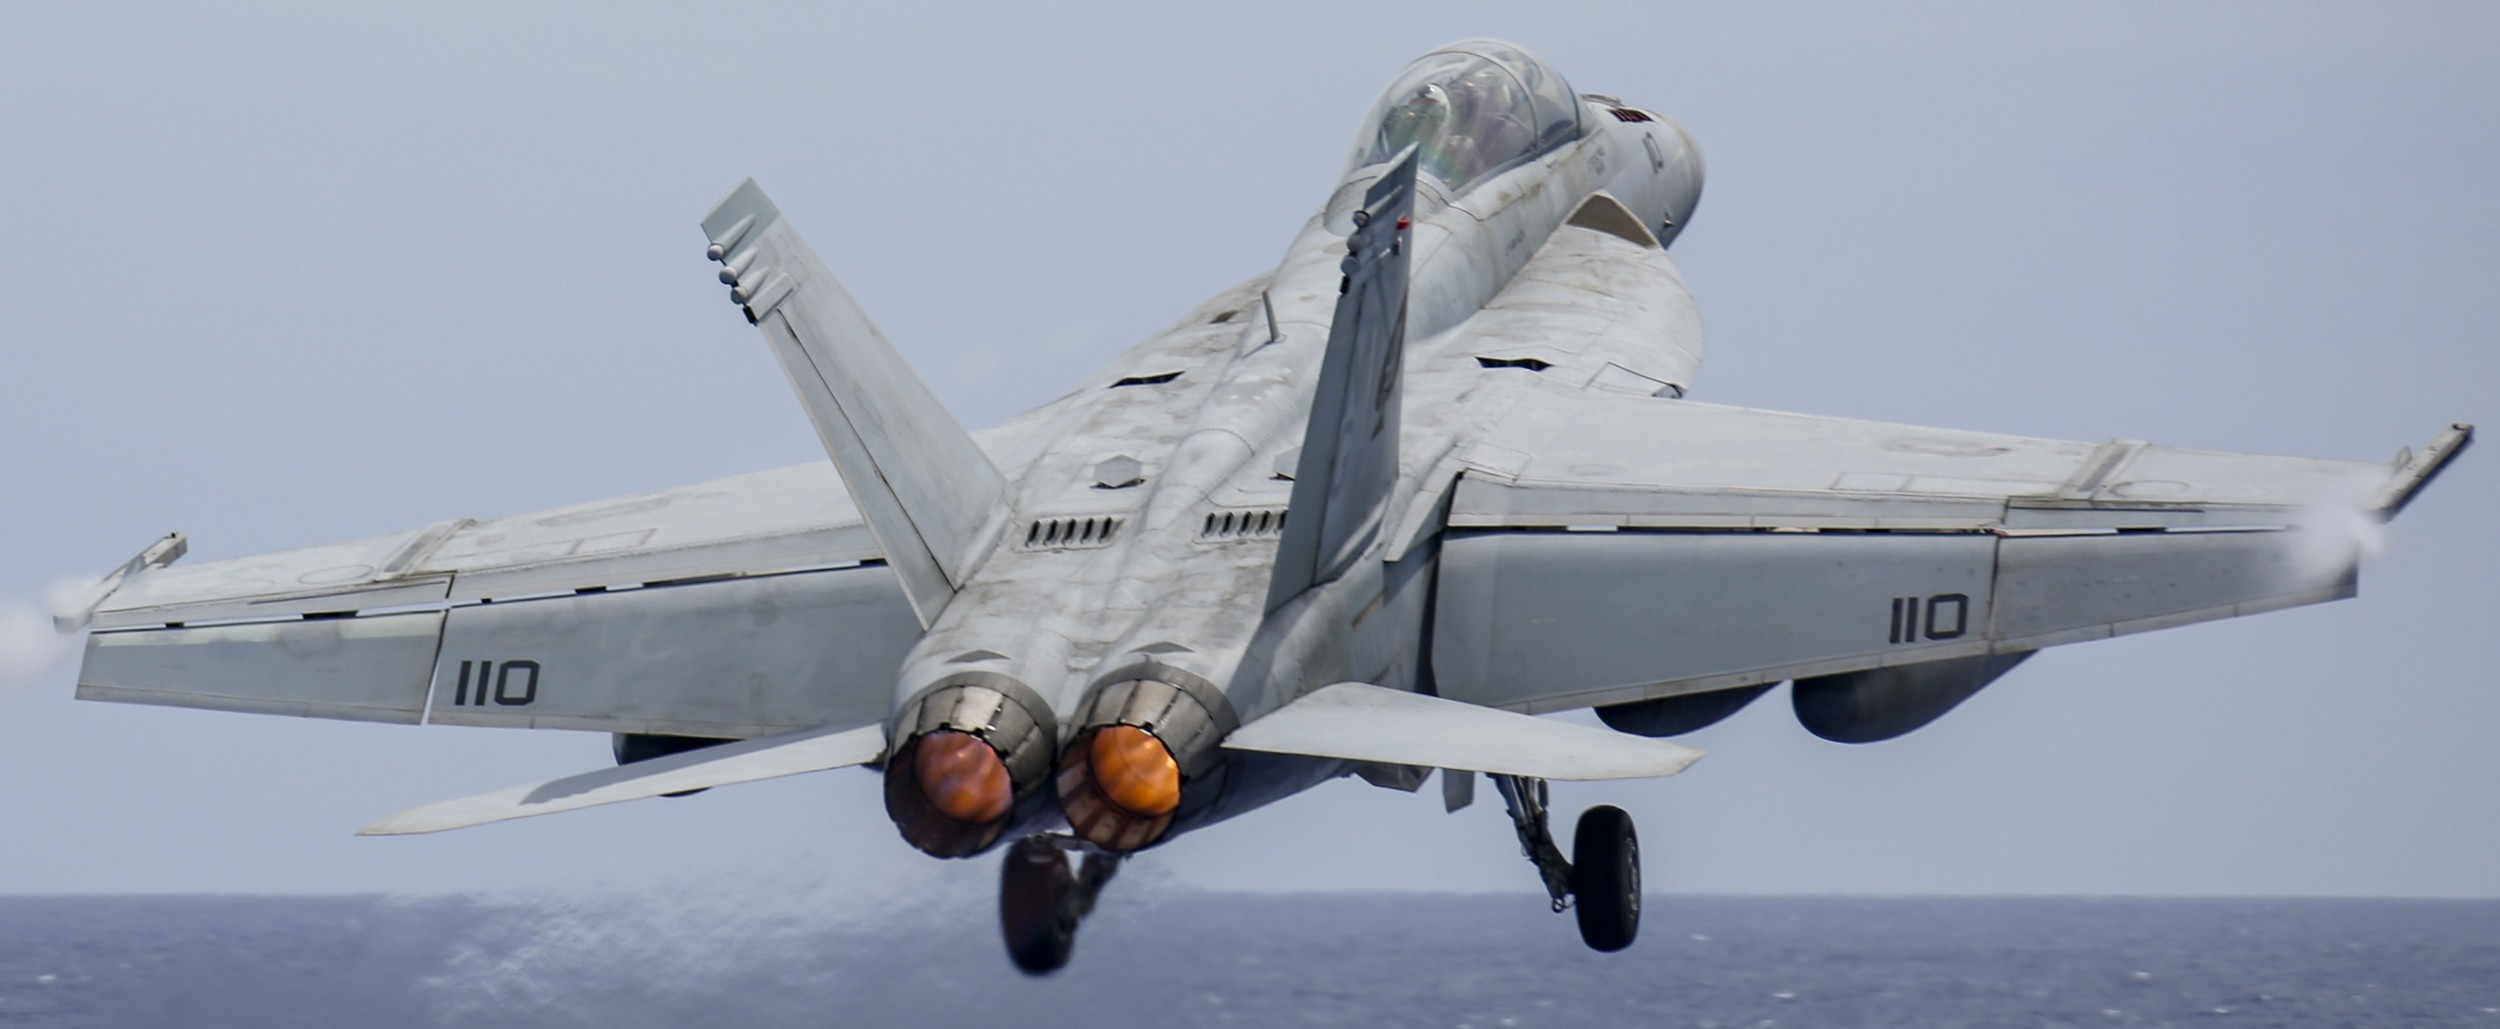 vfa-41 black aces strike fighter squadron f/a-18f super hornet cvw-9 cvn-72 uss abraham lincoln us navy 93